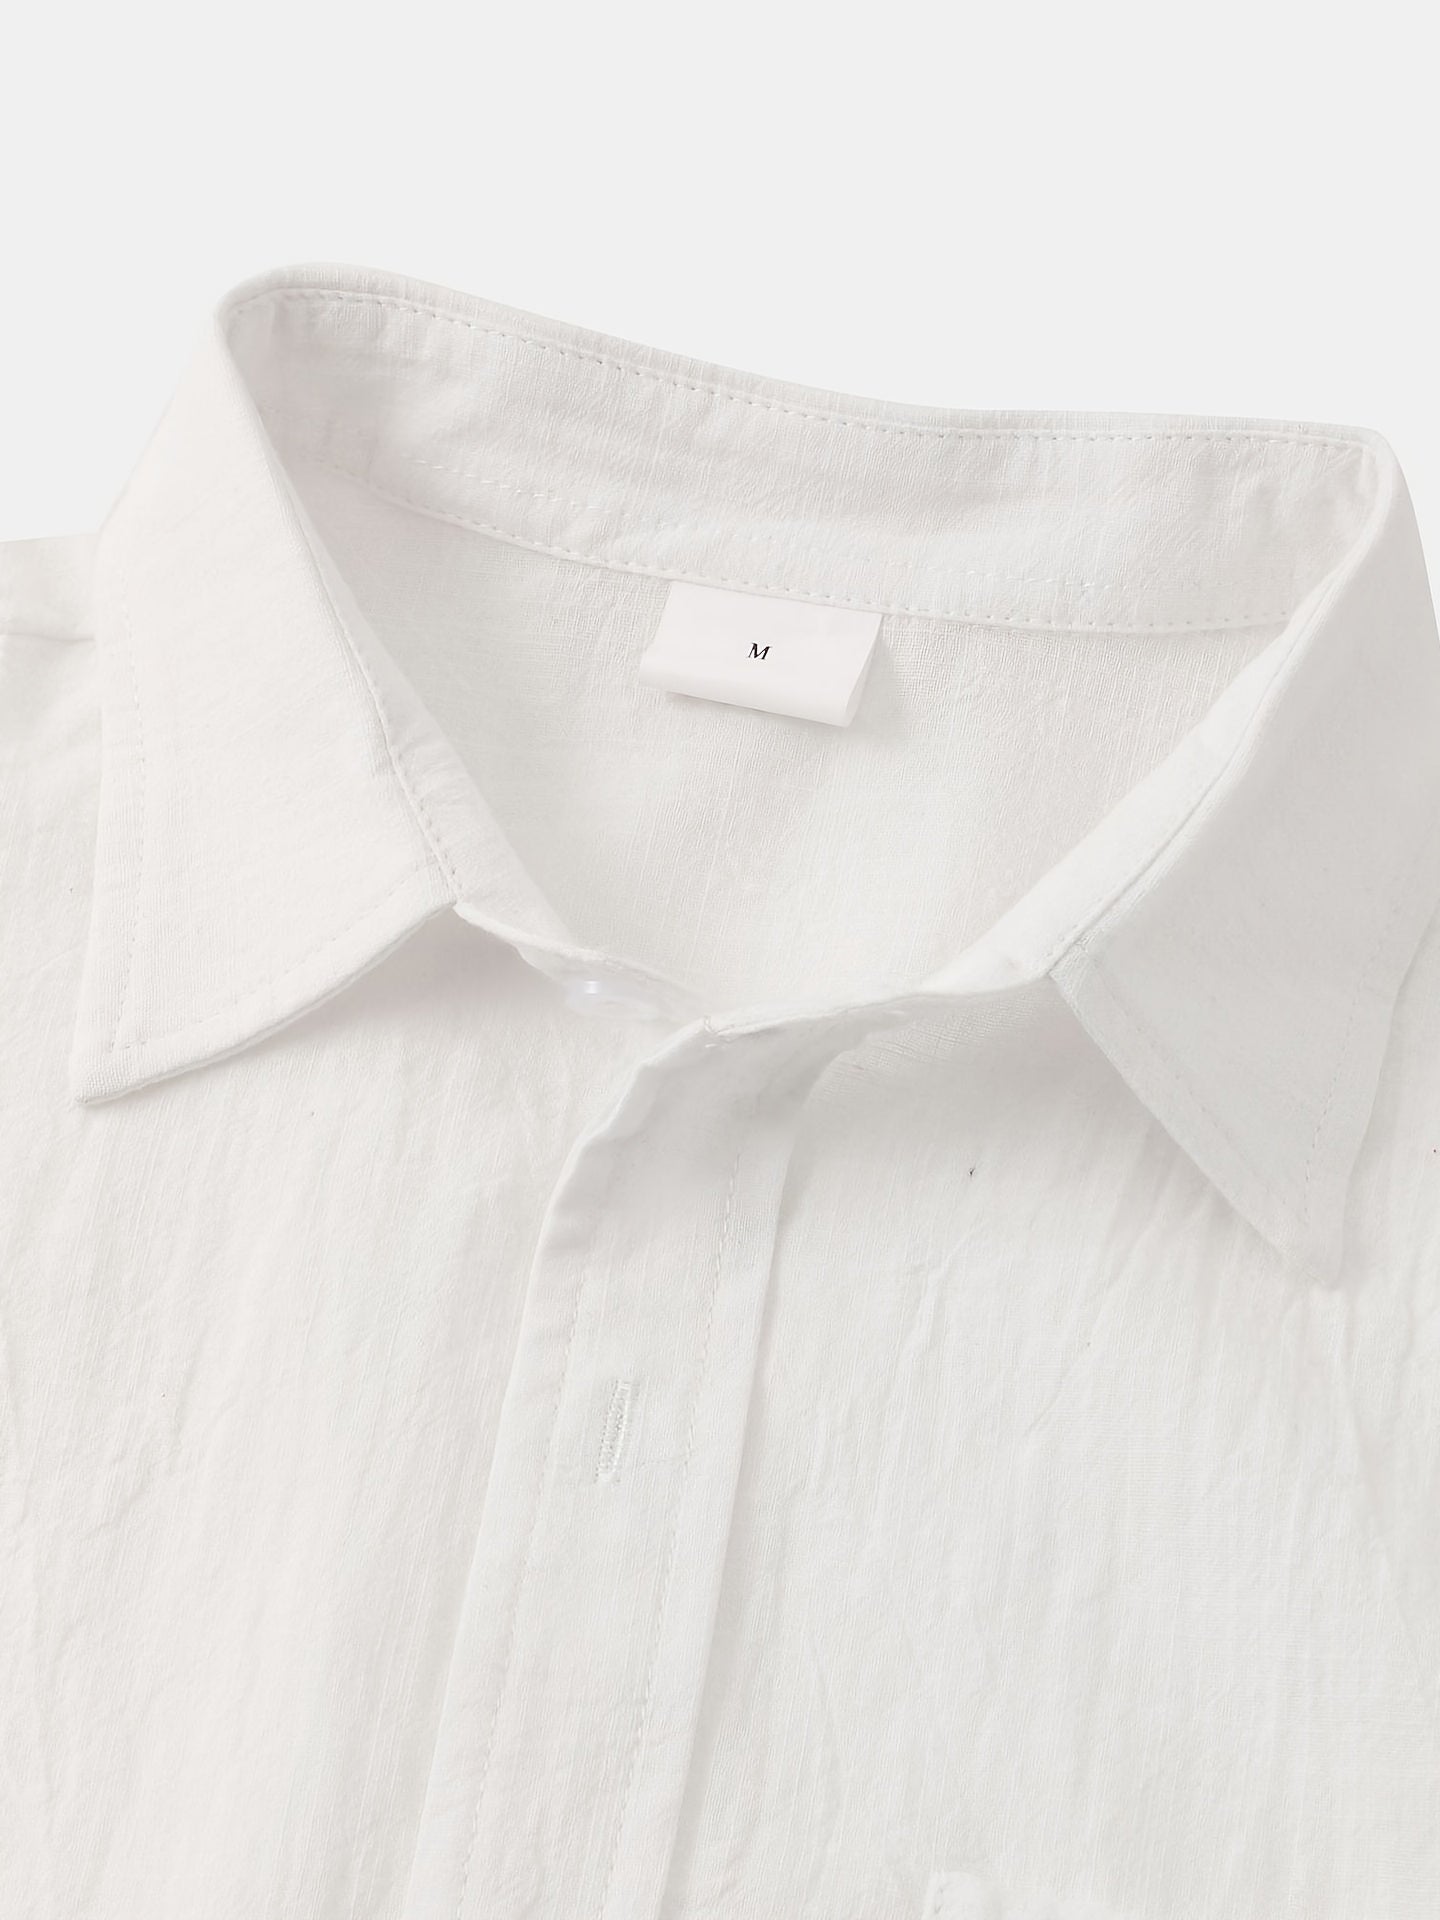 Linen Button-Down Shirt: Lightweight and Comfortable for Summer Fashion